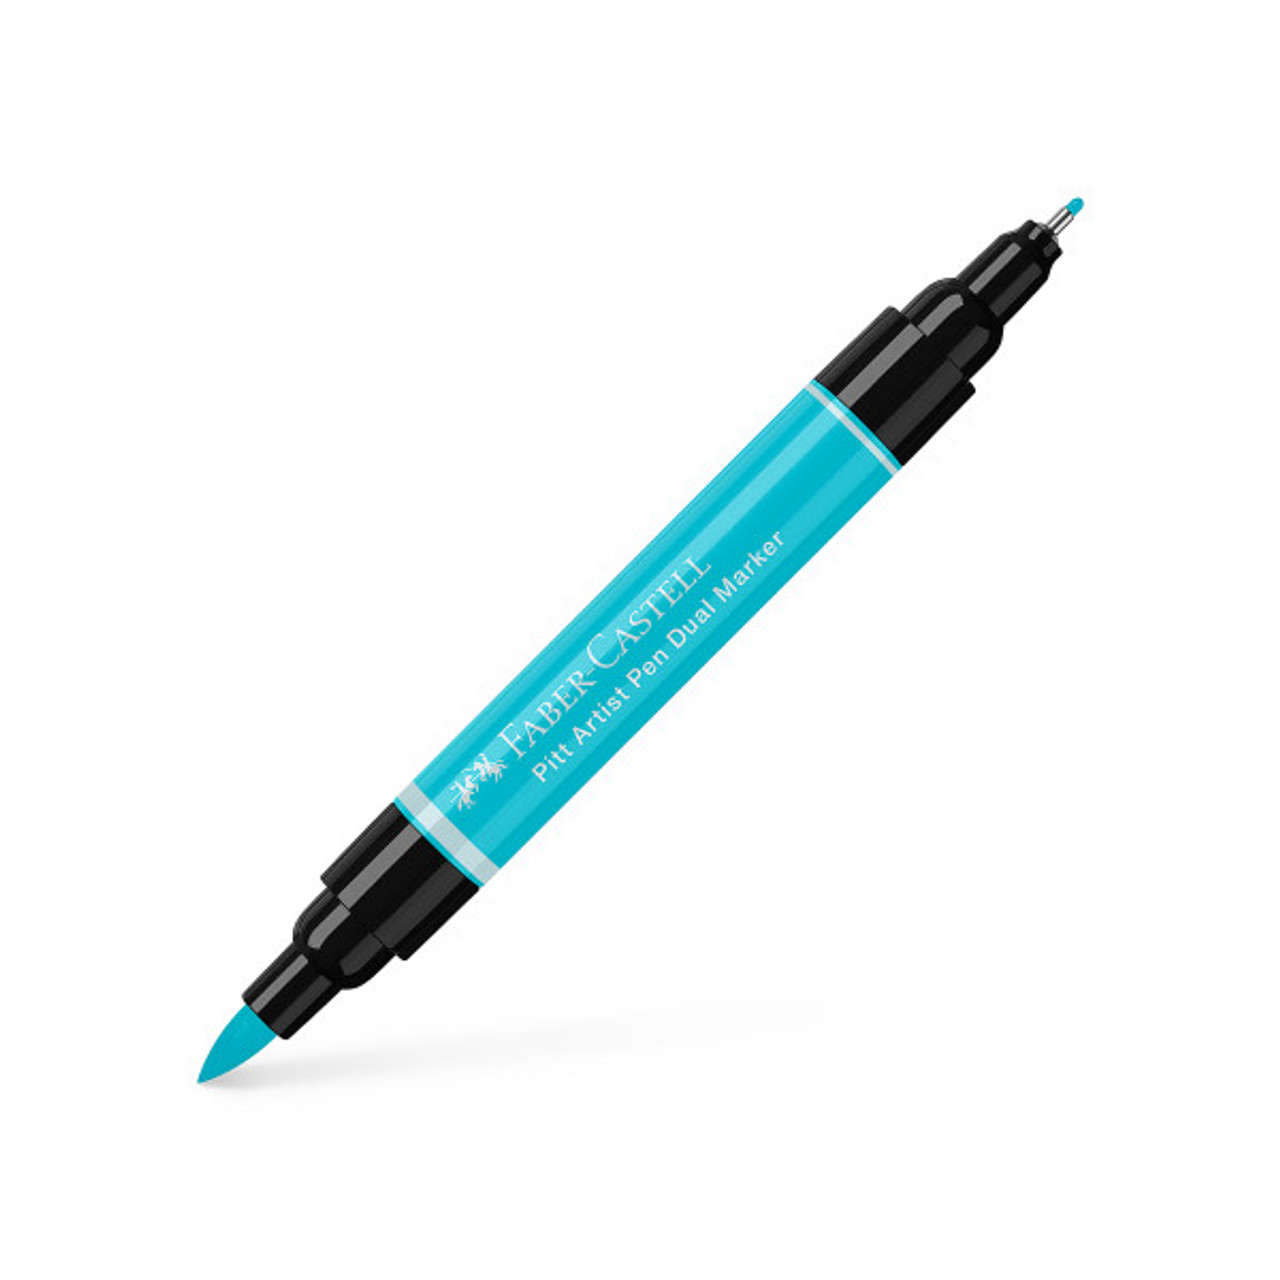 154 Light Cobalt Turquoise - Buy 4, Get 1 Free - Pitt Artist Pen Dual Marker - Faber Castell